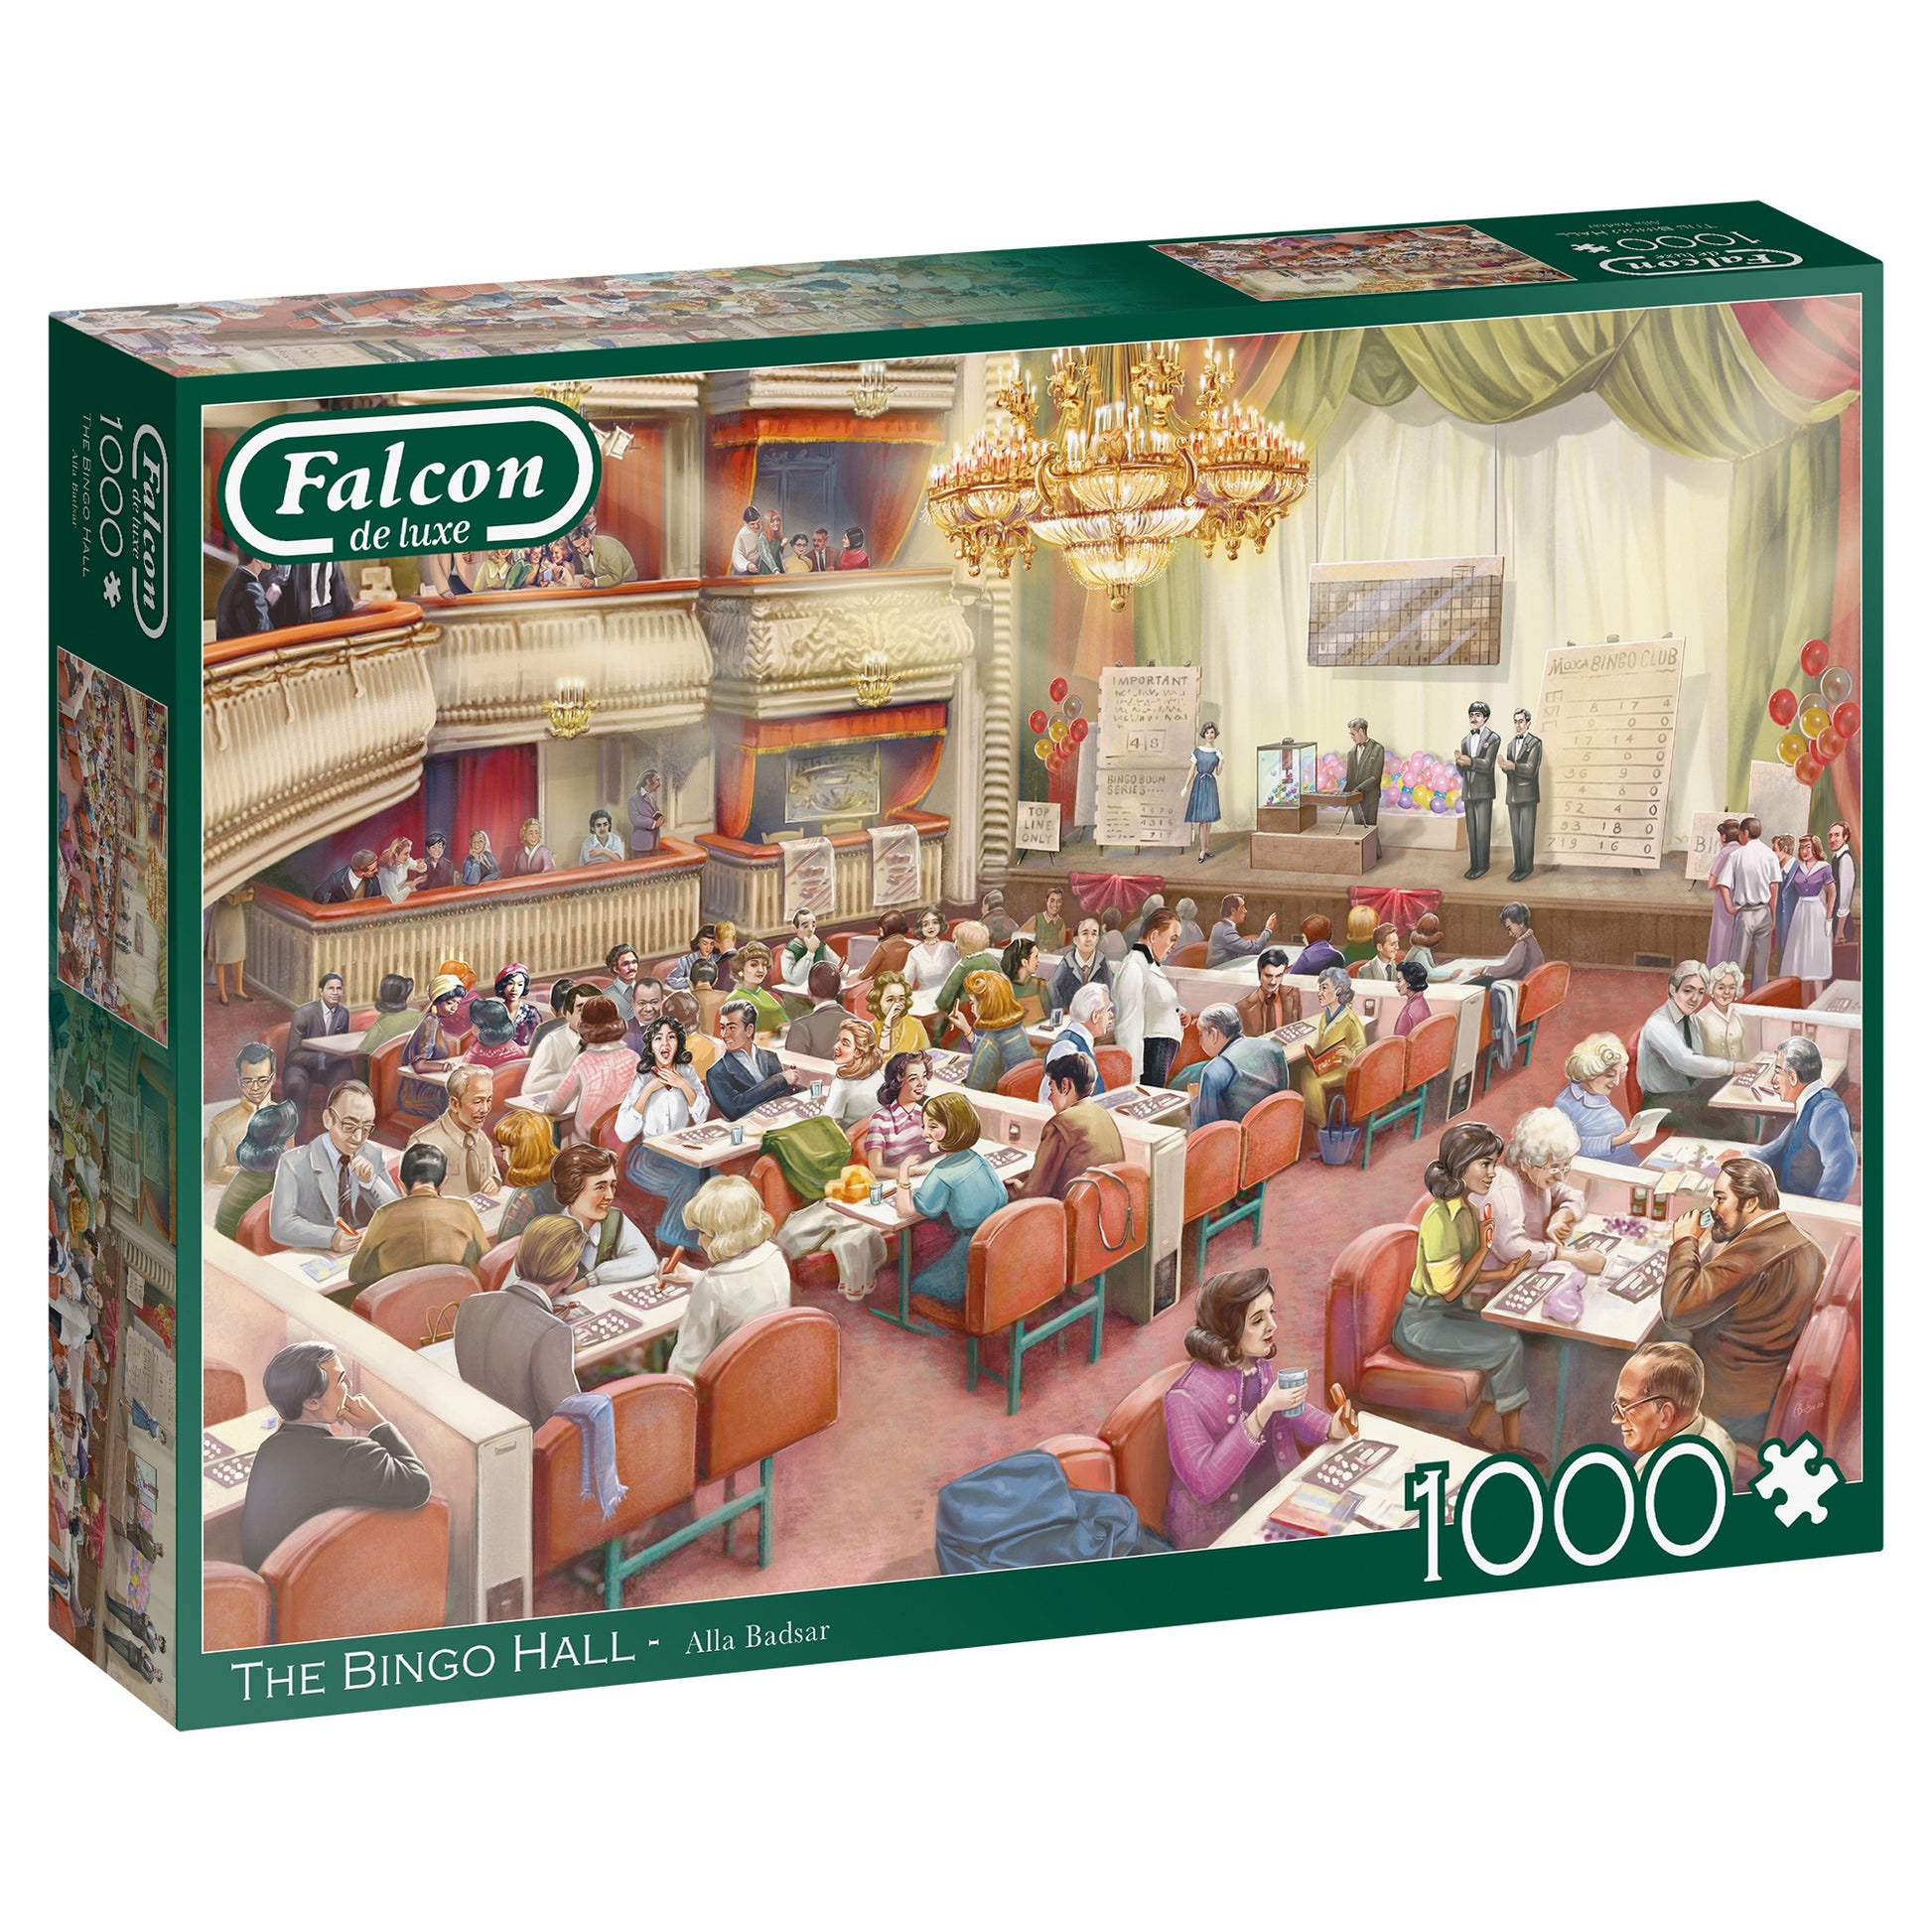 Falcon - The Bingo Hall (1000 pieces) - product image - Jumboplay.com